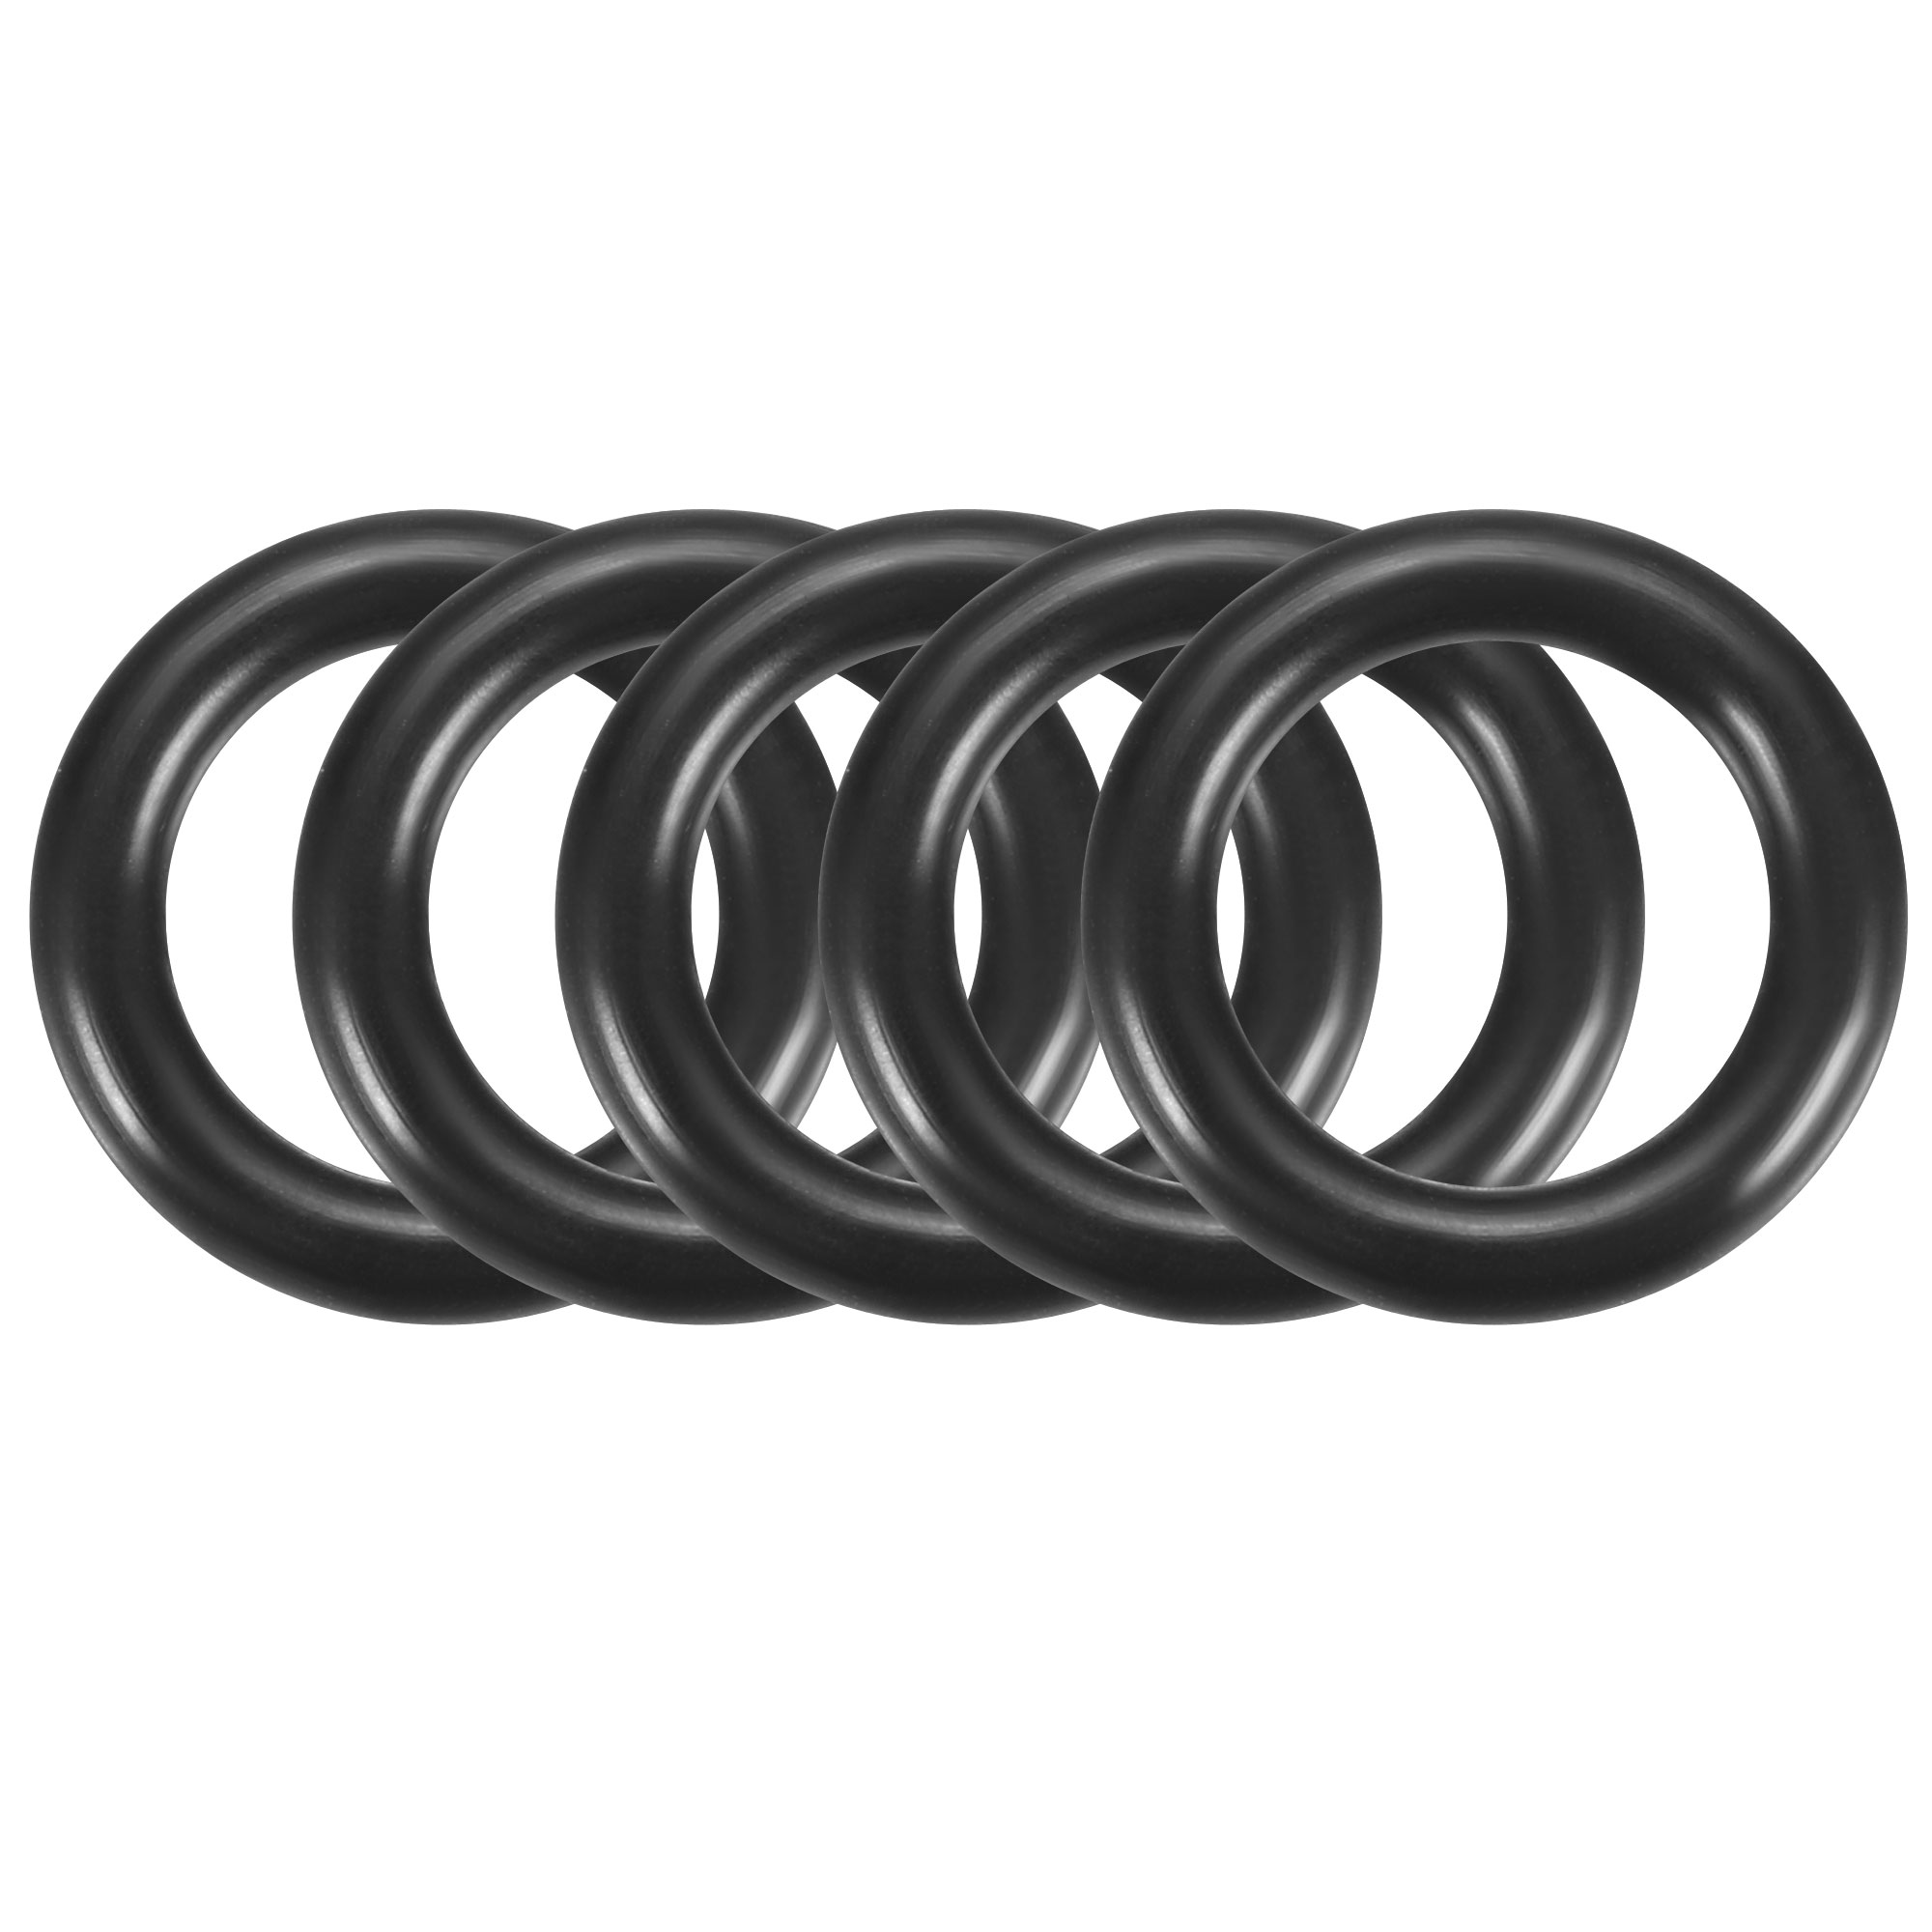 Unique Bargains 50Pcs 14mm x 2.4mm Black Flexible Nitrile Rubber O Ring Oil Seal Washer Grommets